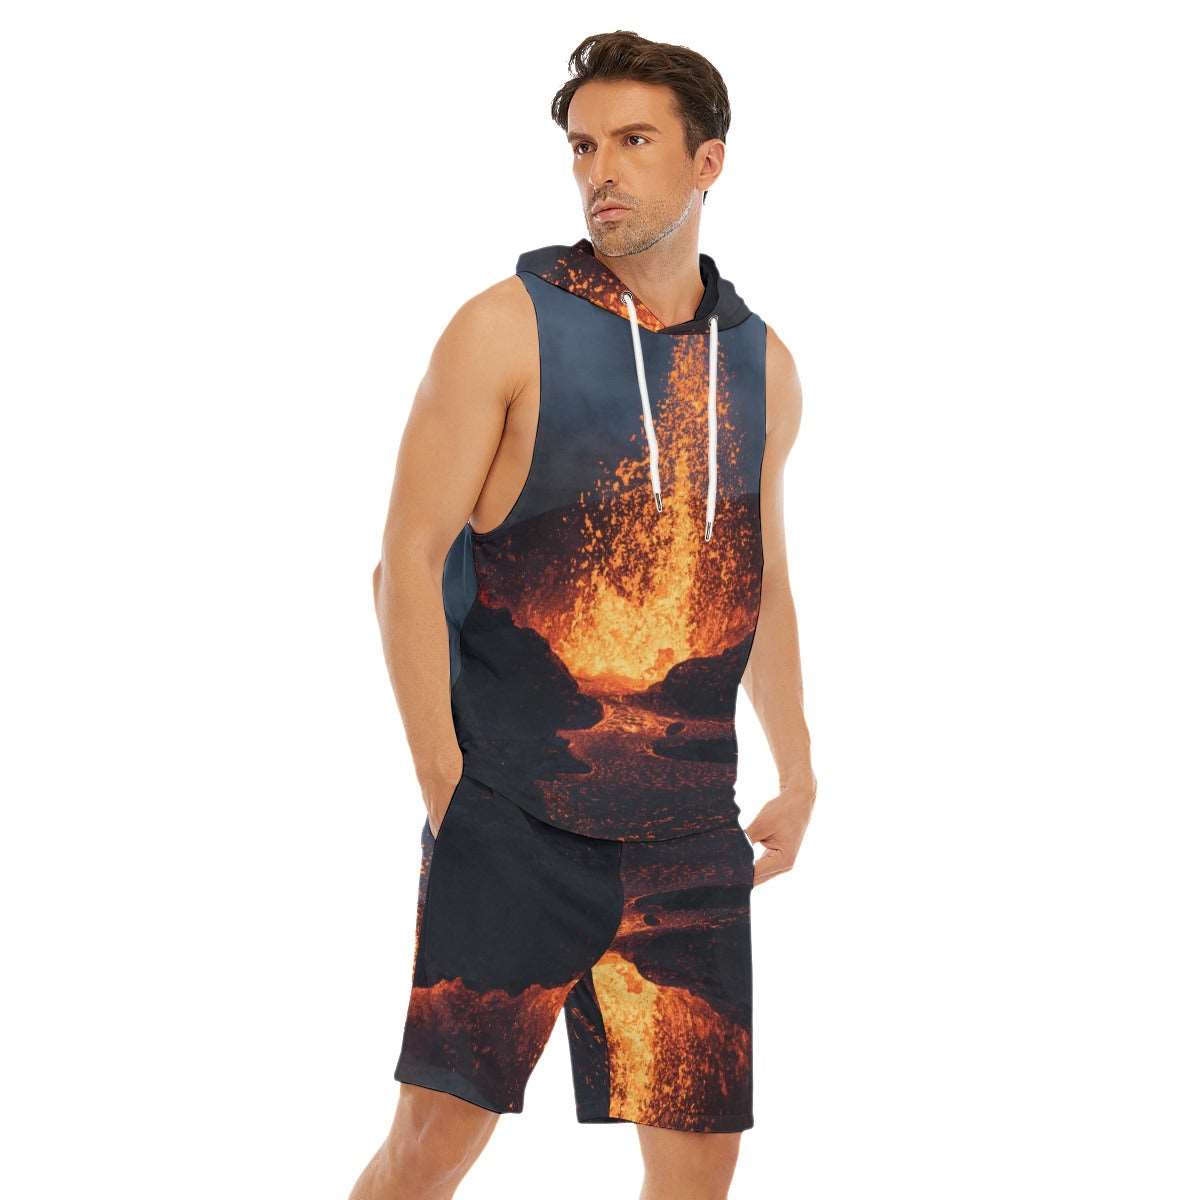 Fired up burnt orange dragon Men's Sleeveless Vest And Shorts Sets